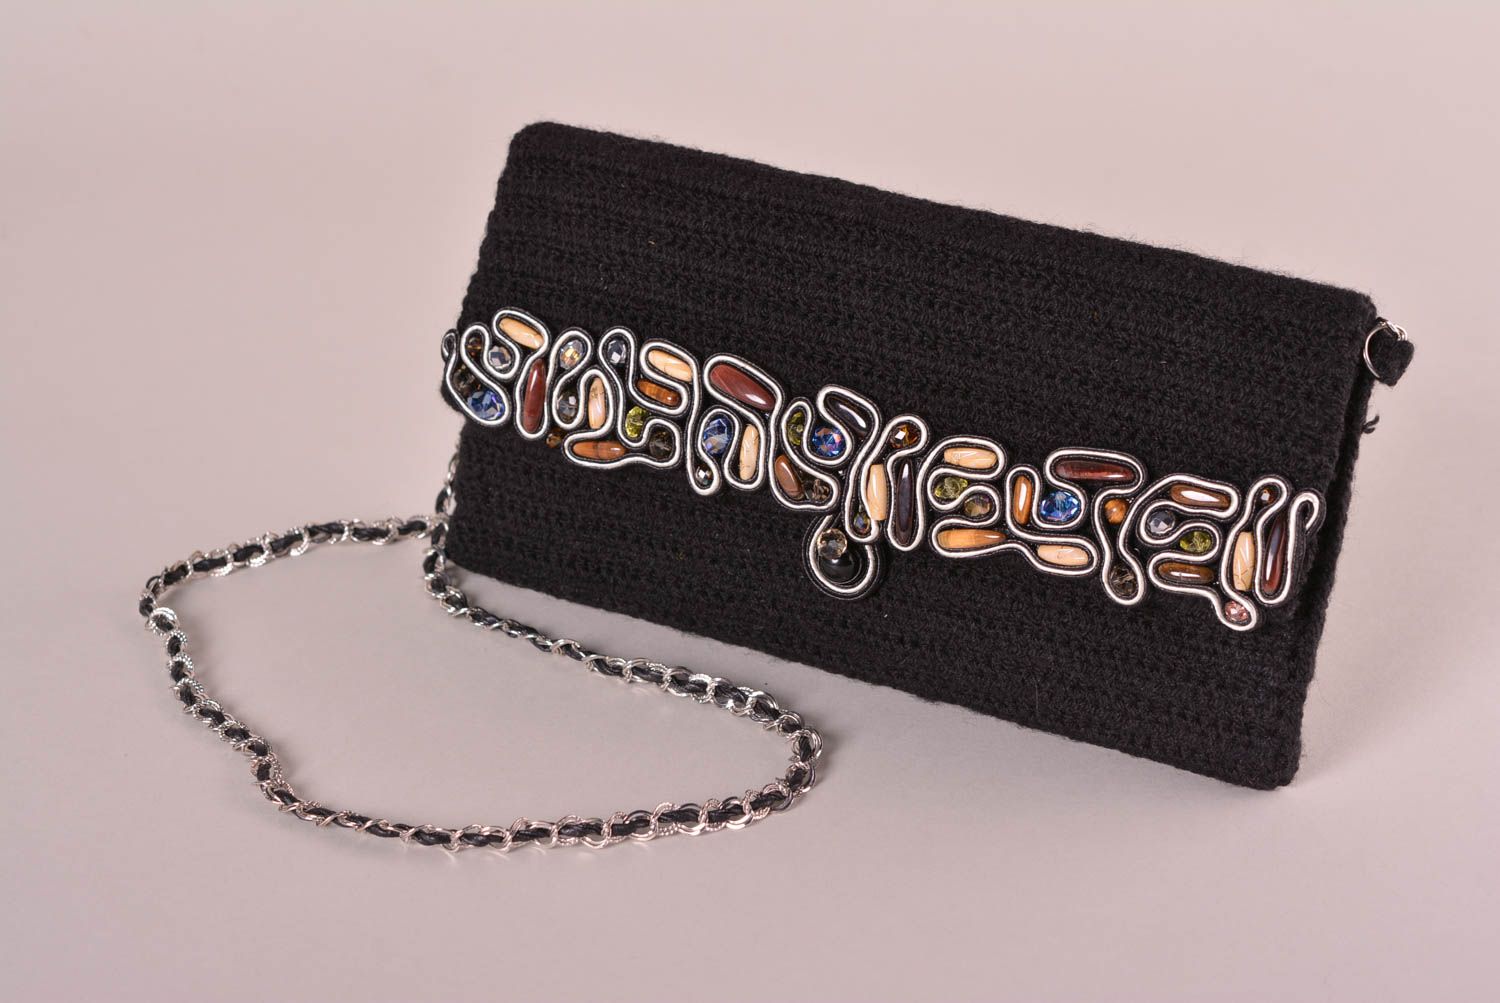 Handmade clutch bag designer bag ladies bags fashion accessories for women photo 1